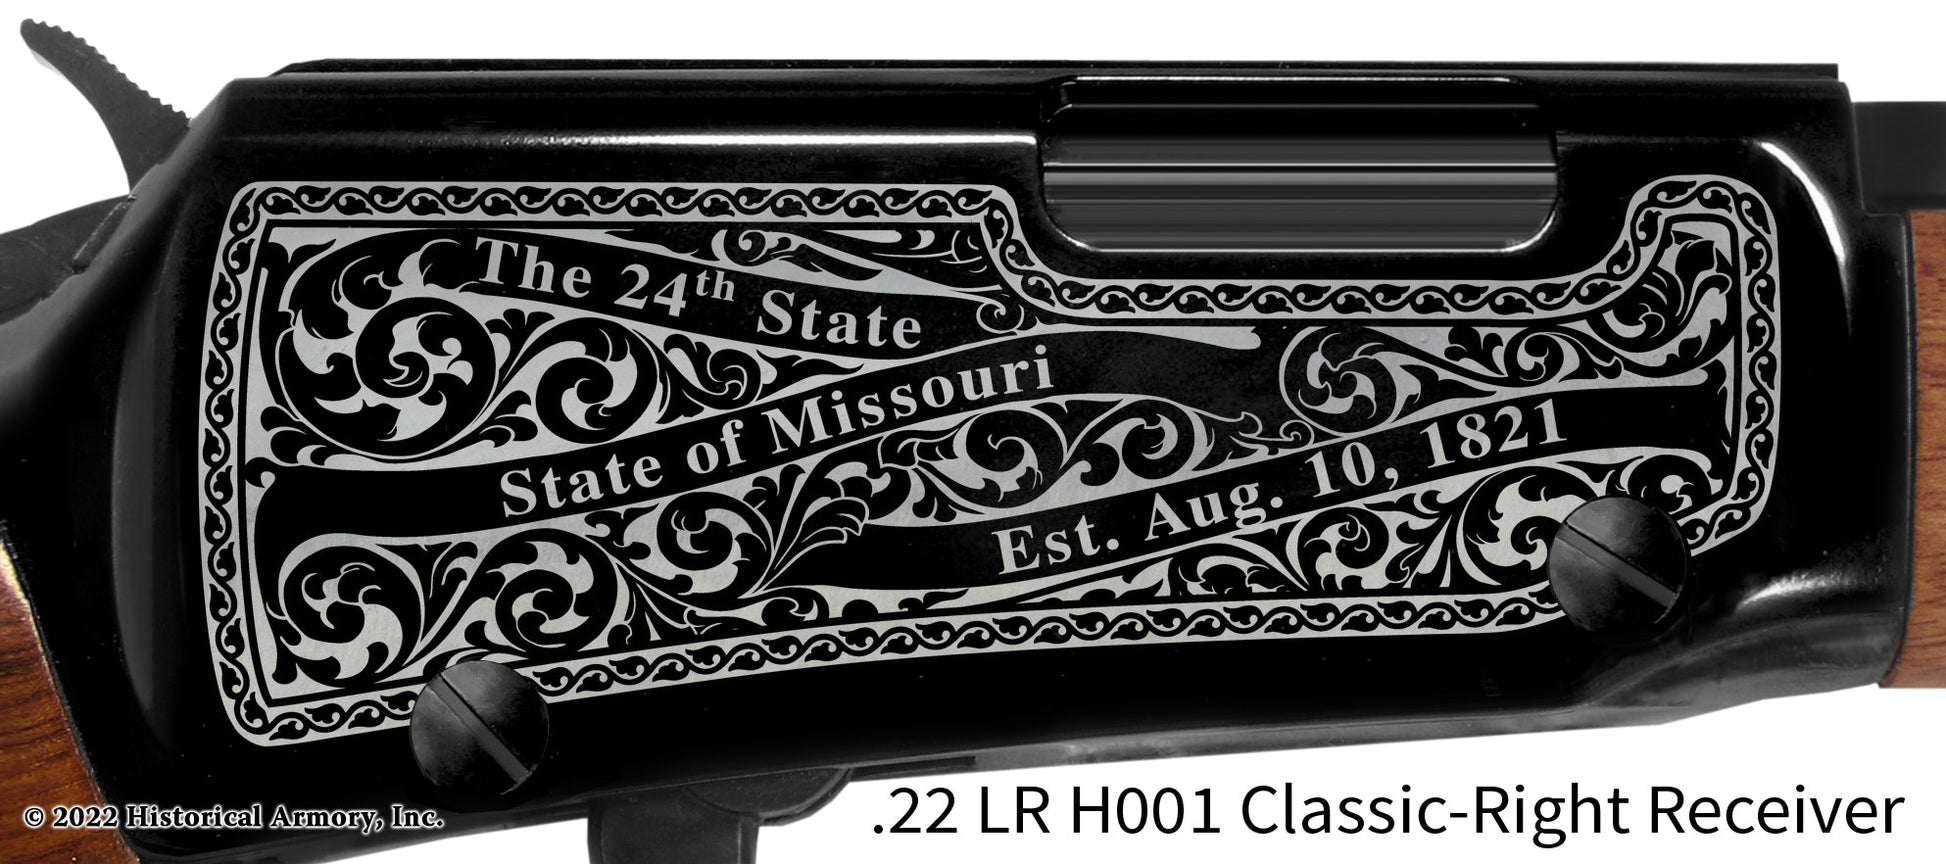 Scotland County Missouri Engraved Henry H001 Rifle